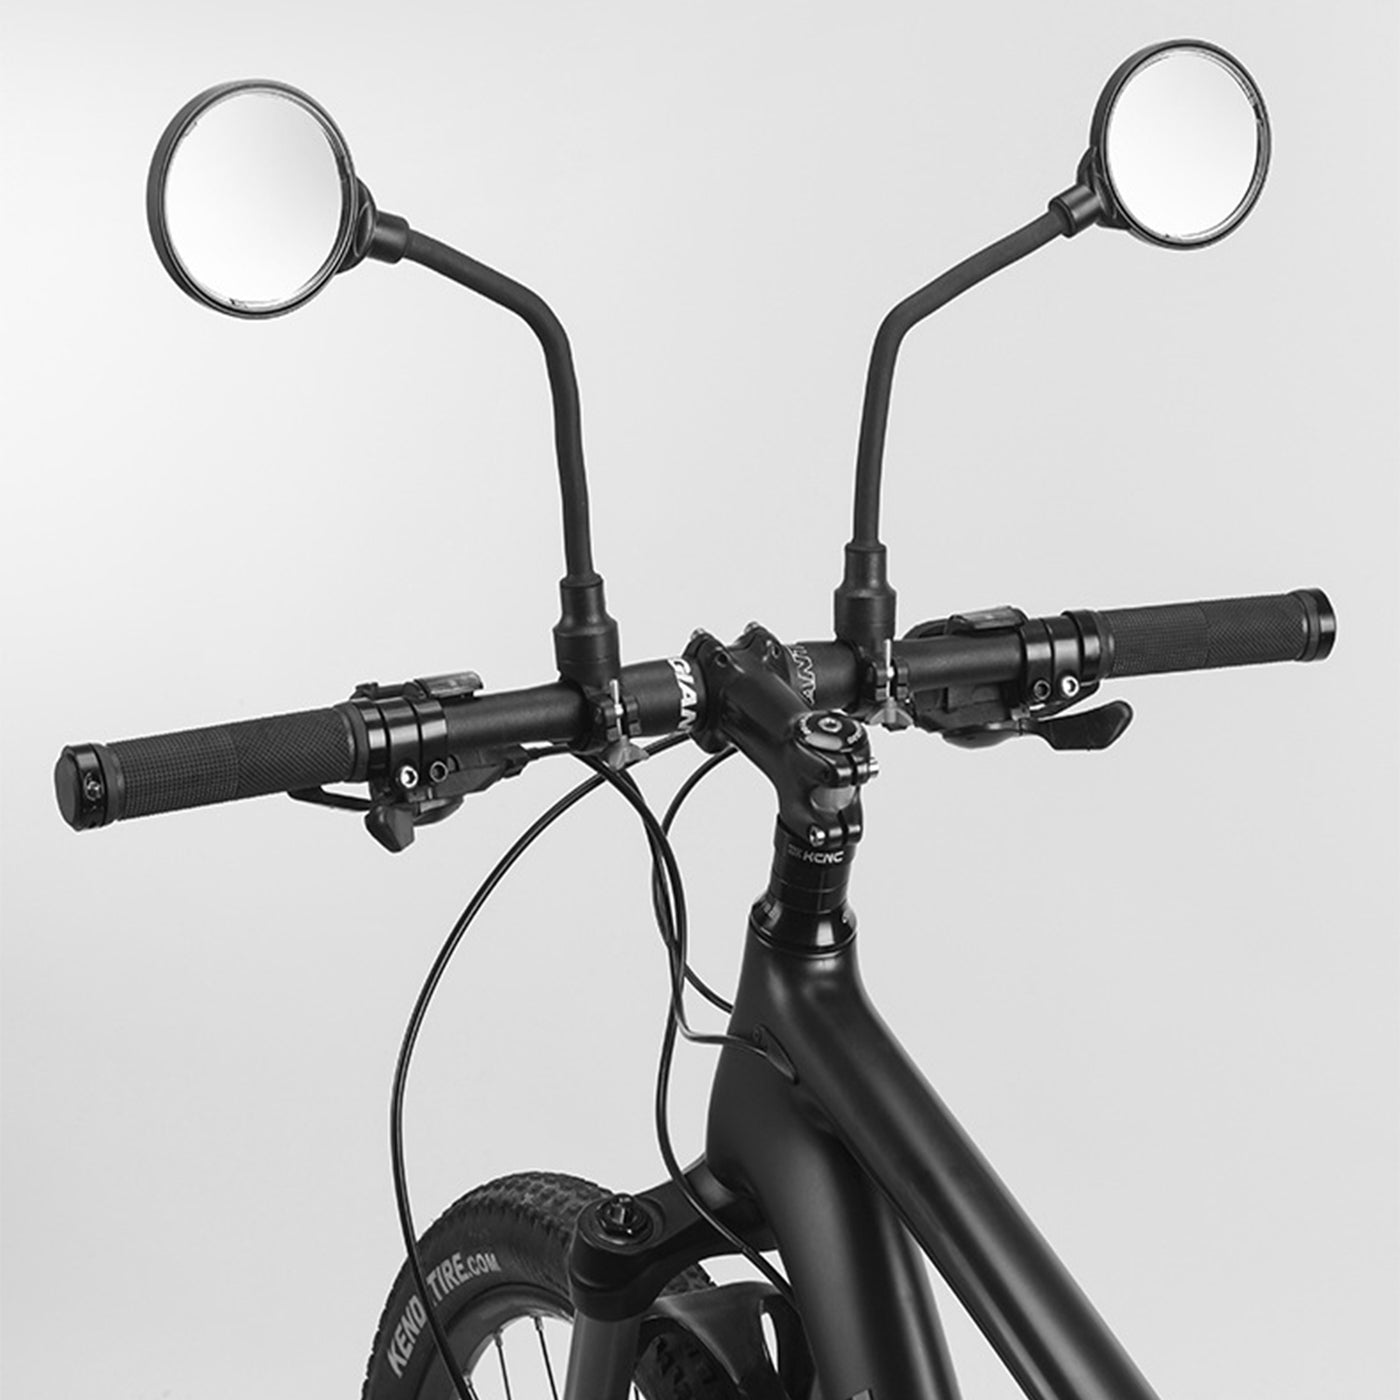 Electric Bike Company Rearview Mirror